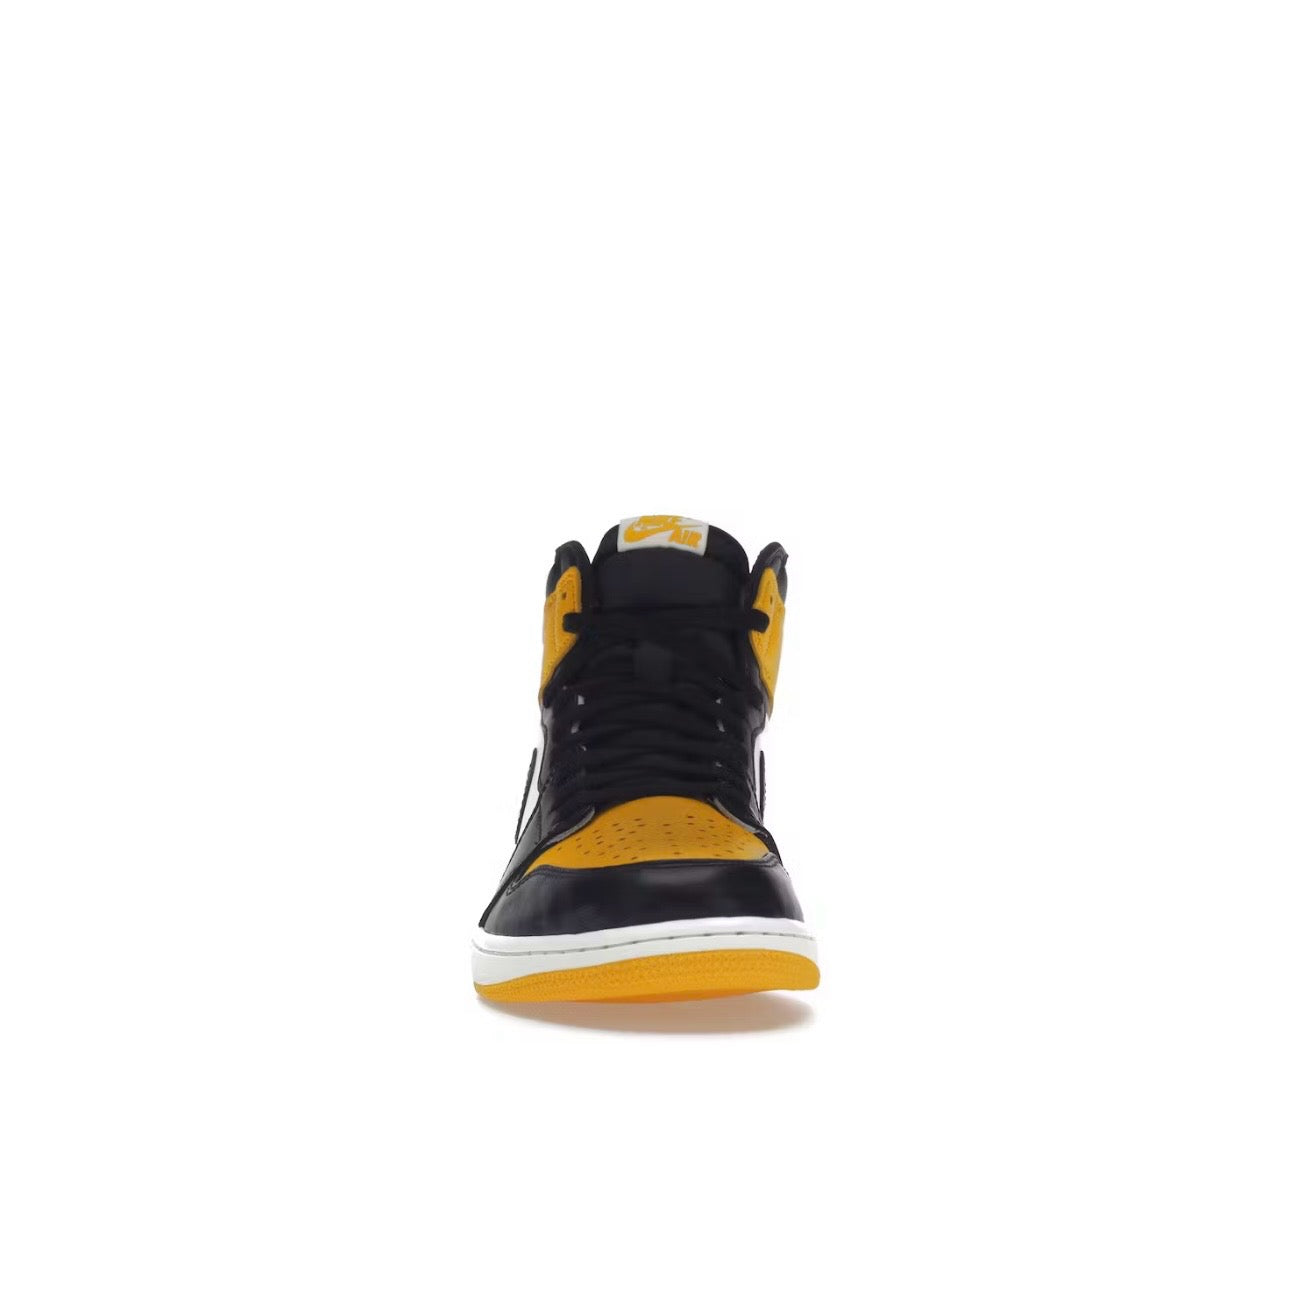 Air Jordan 1 Retro High Og Amarillo con negro - PENGUIN SHOES Penguin shoes